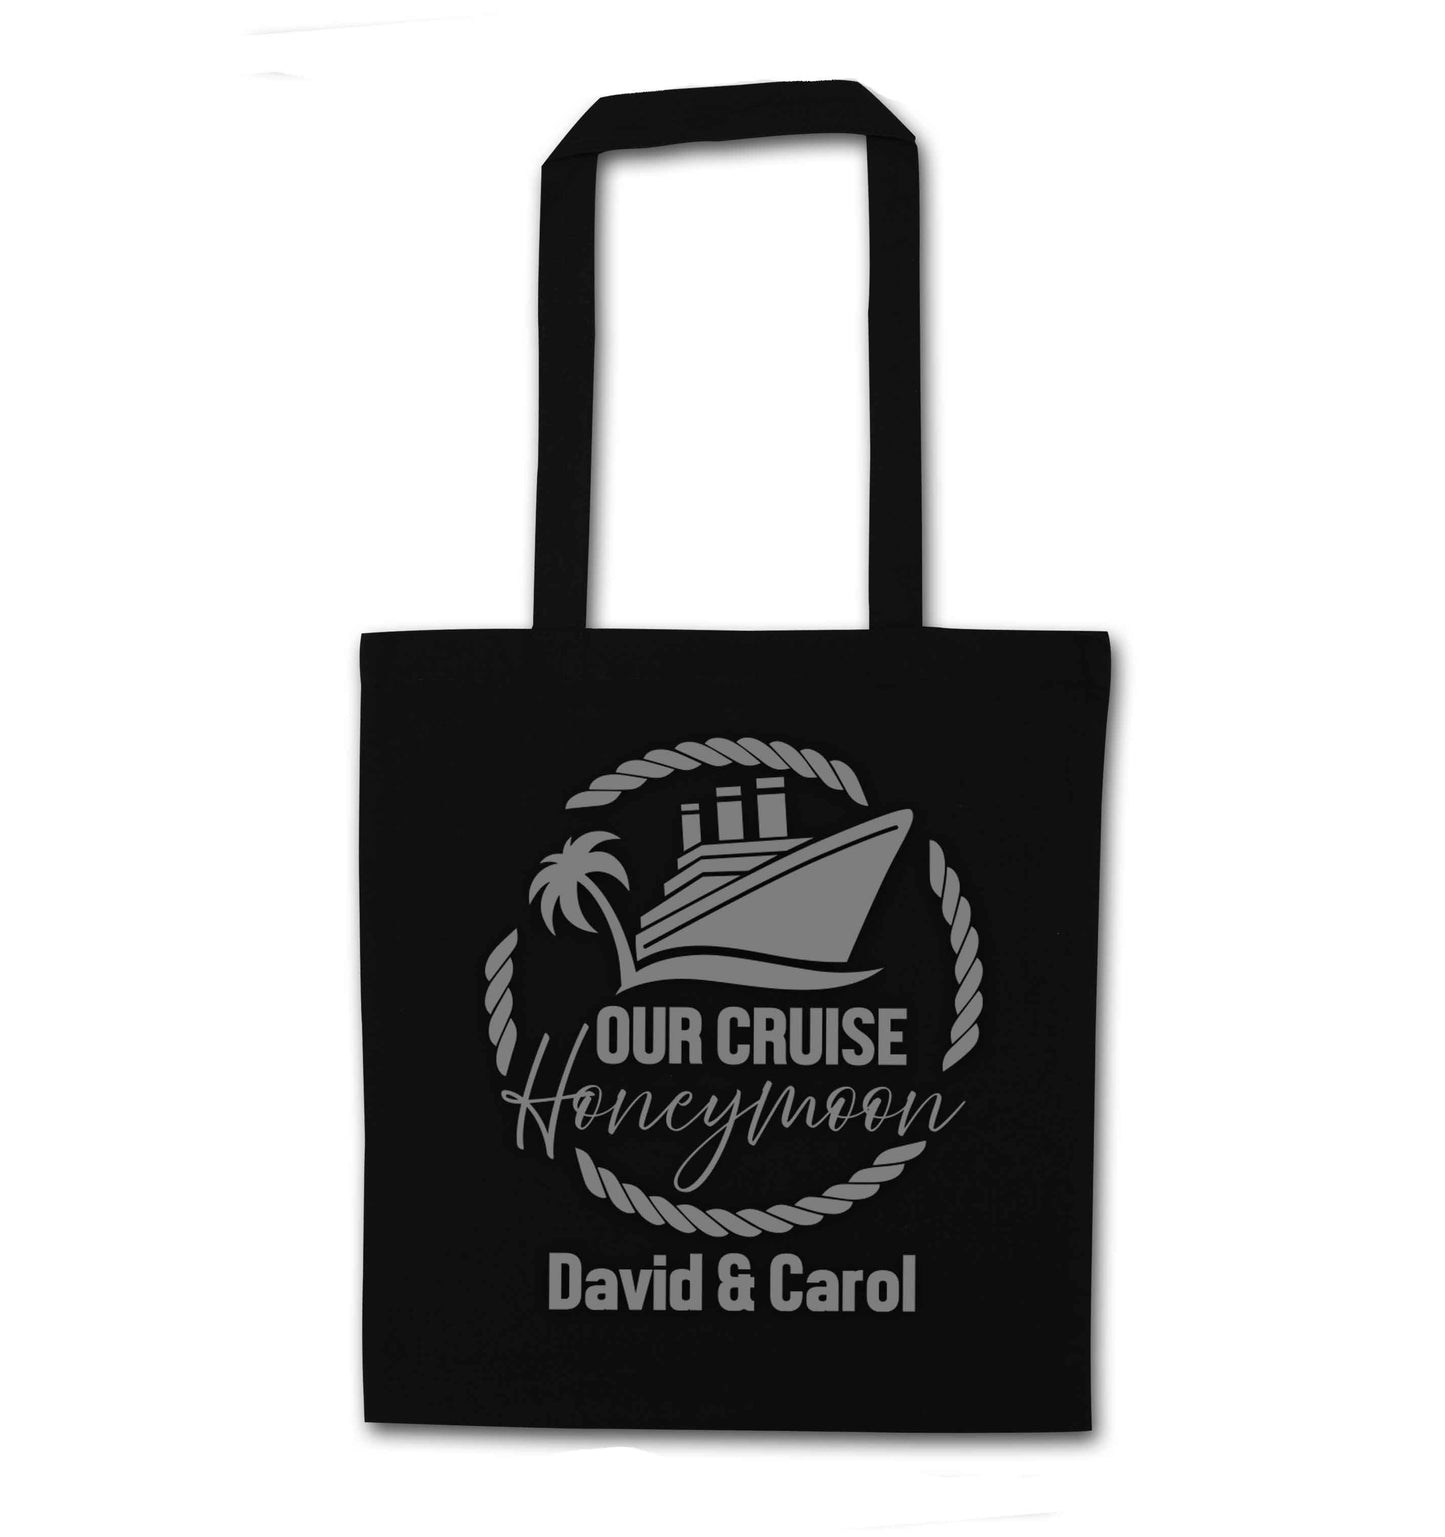 Our cruise honeymoon personalised black tote bag